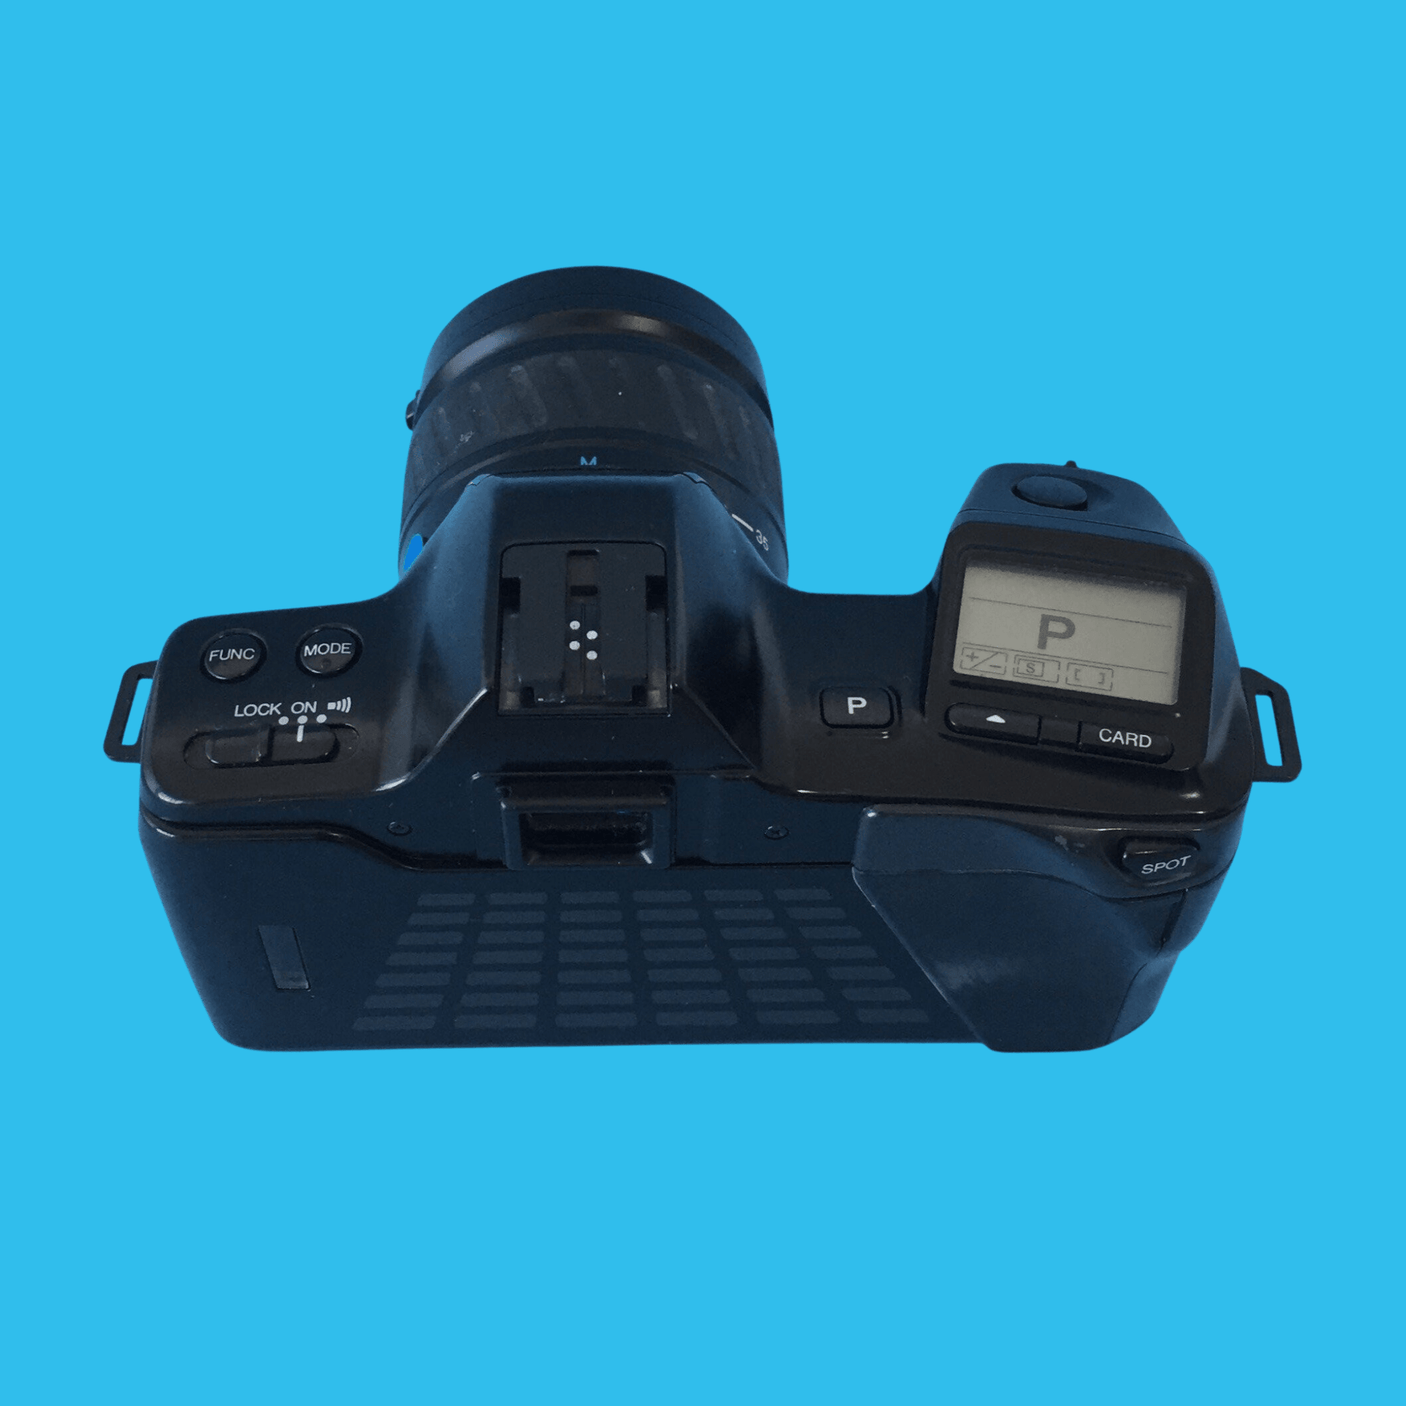 Minolta Maxxum 7000i Automatic SLR 35mm Film Camera with Minolta AF 35mm-105mm Zoom Lens